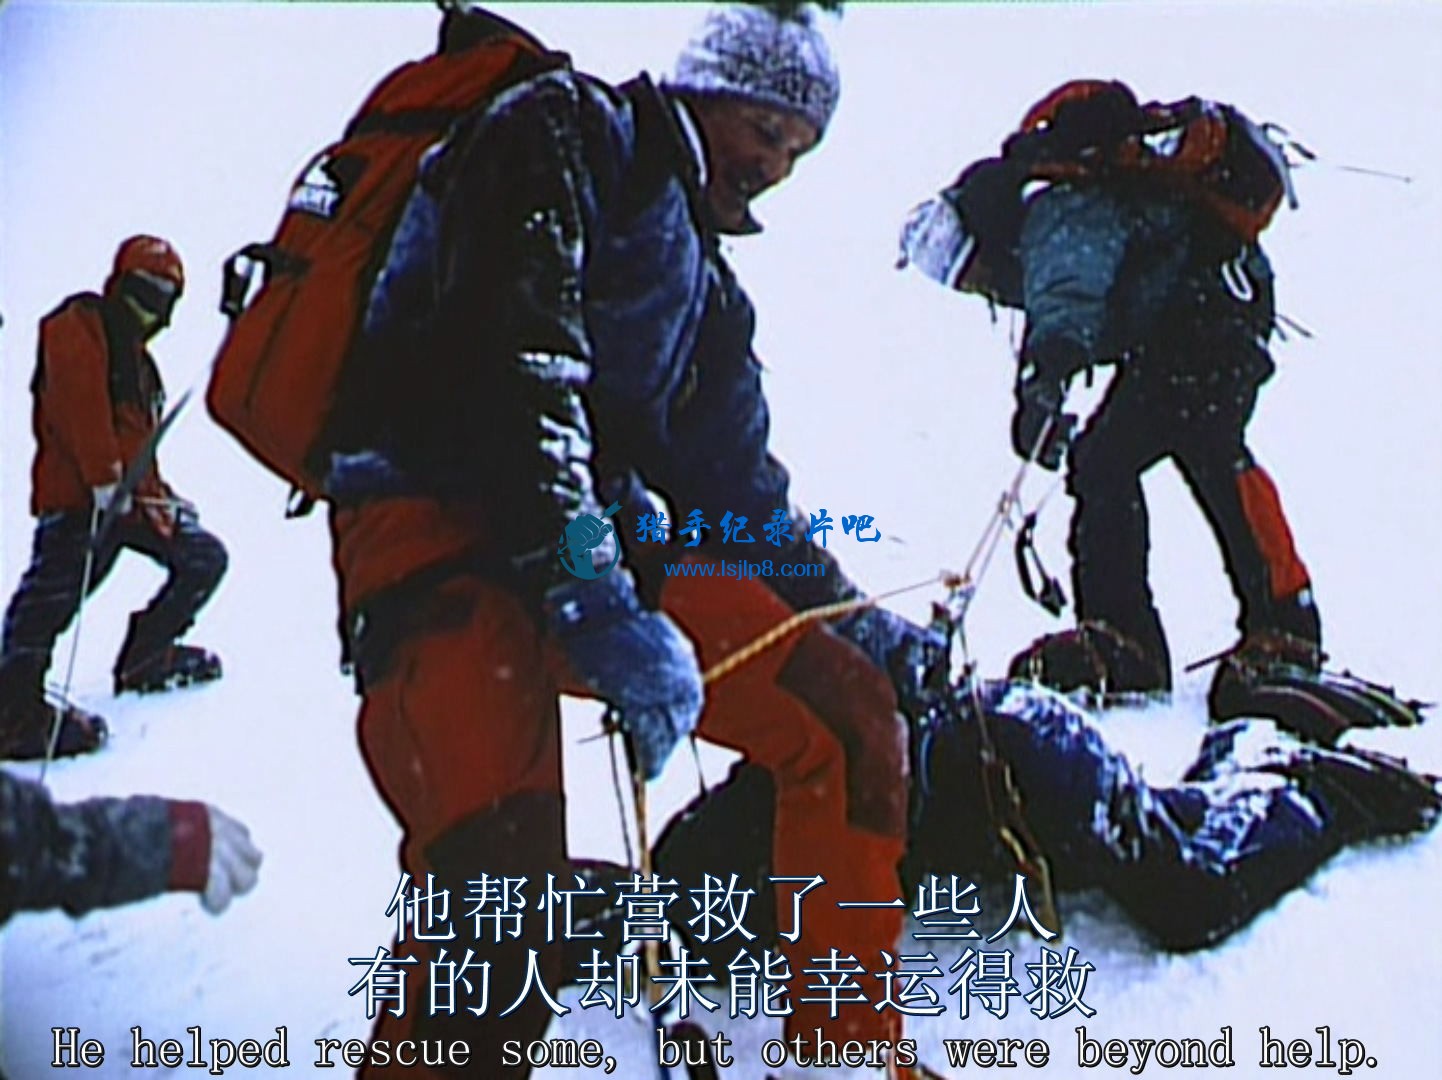 NOVA.S25E06.Everest.The.Death.Zone.1998.DVDRip.x264-astro.mkv_.jpg